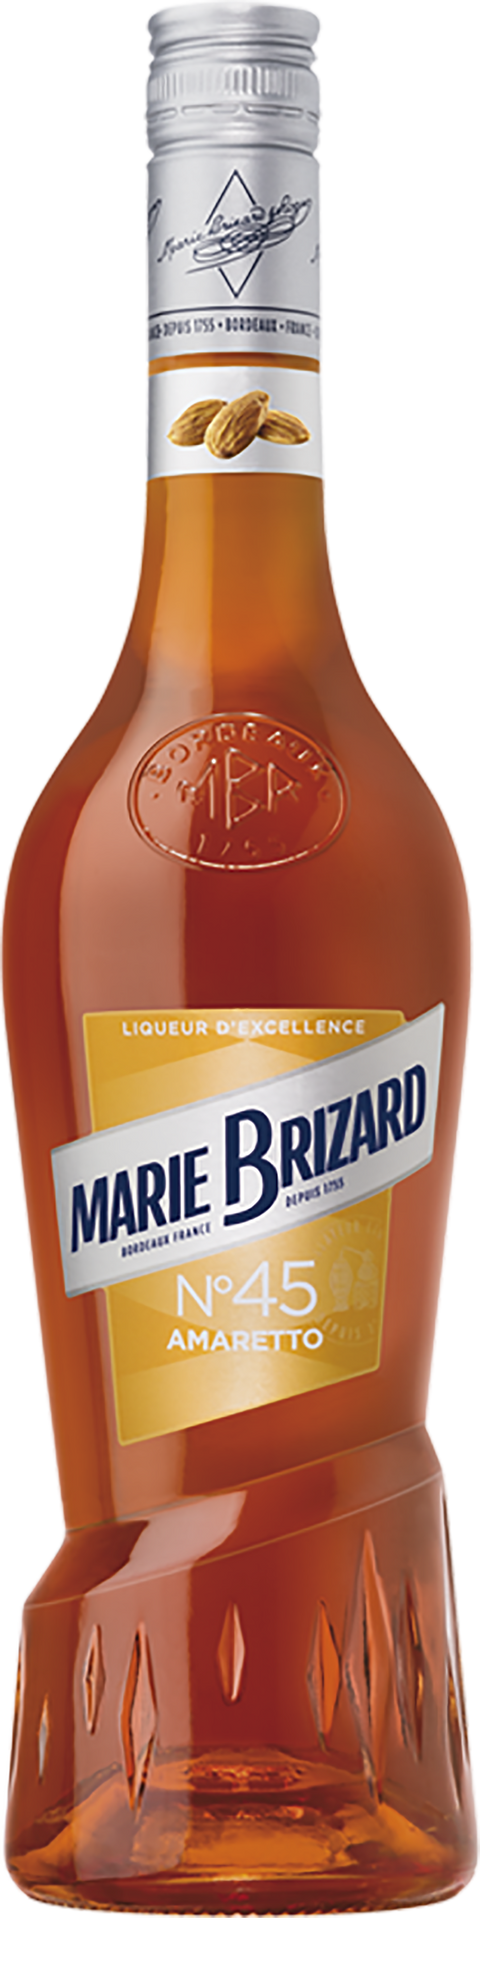 Amaretto---0---Liqueur---Marie Brizard---0.7